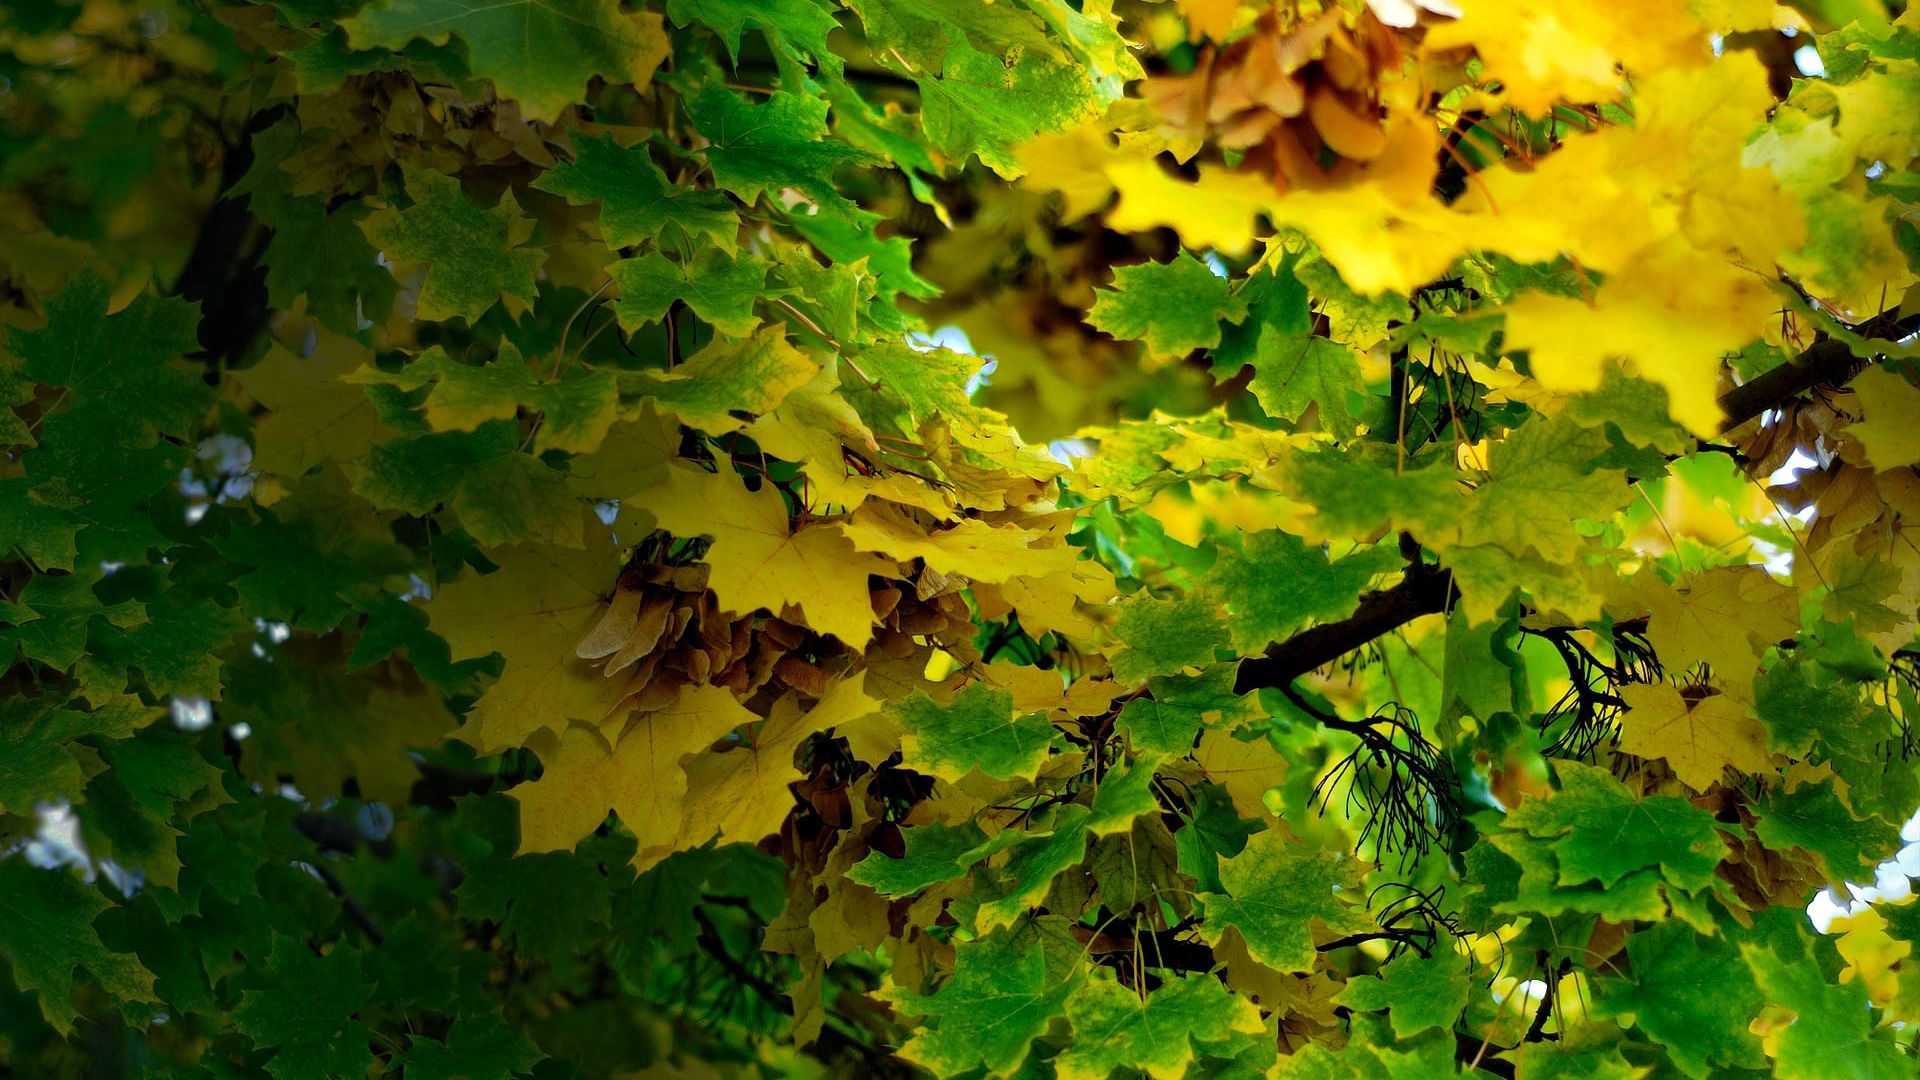 Download wallpaper 1920x1080 leaves, autumn, green full hd, hdtv, fhd